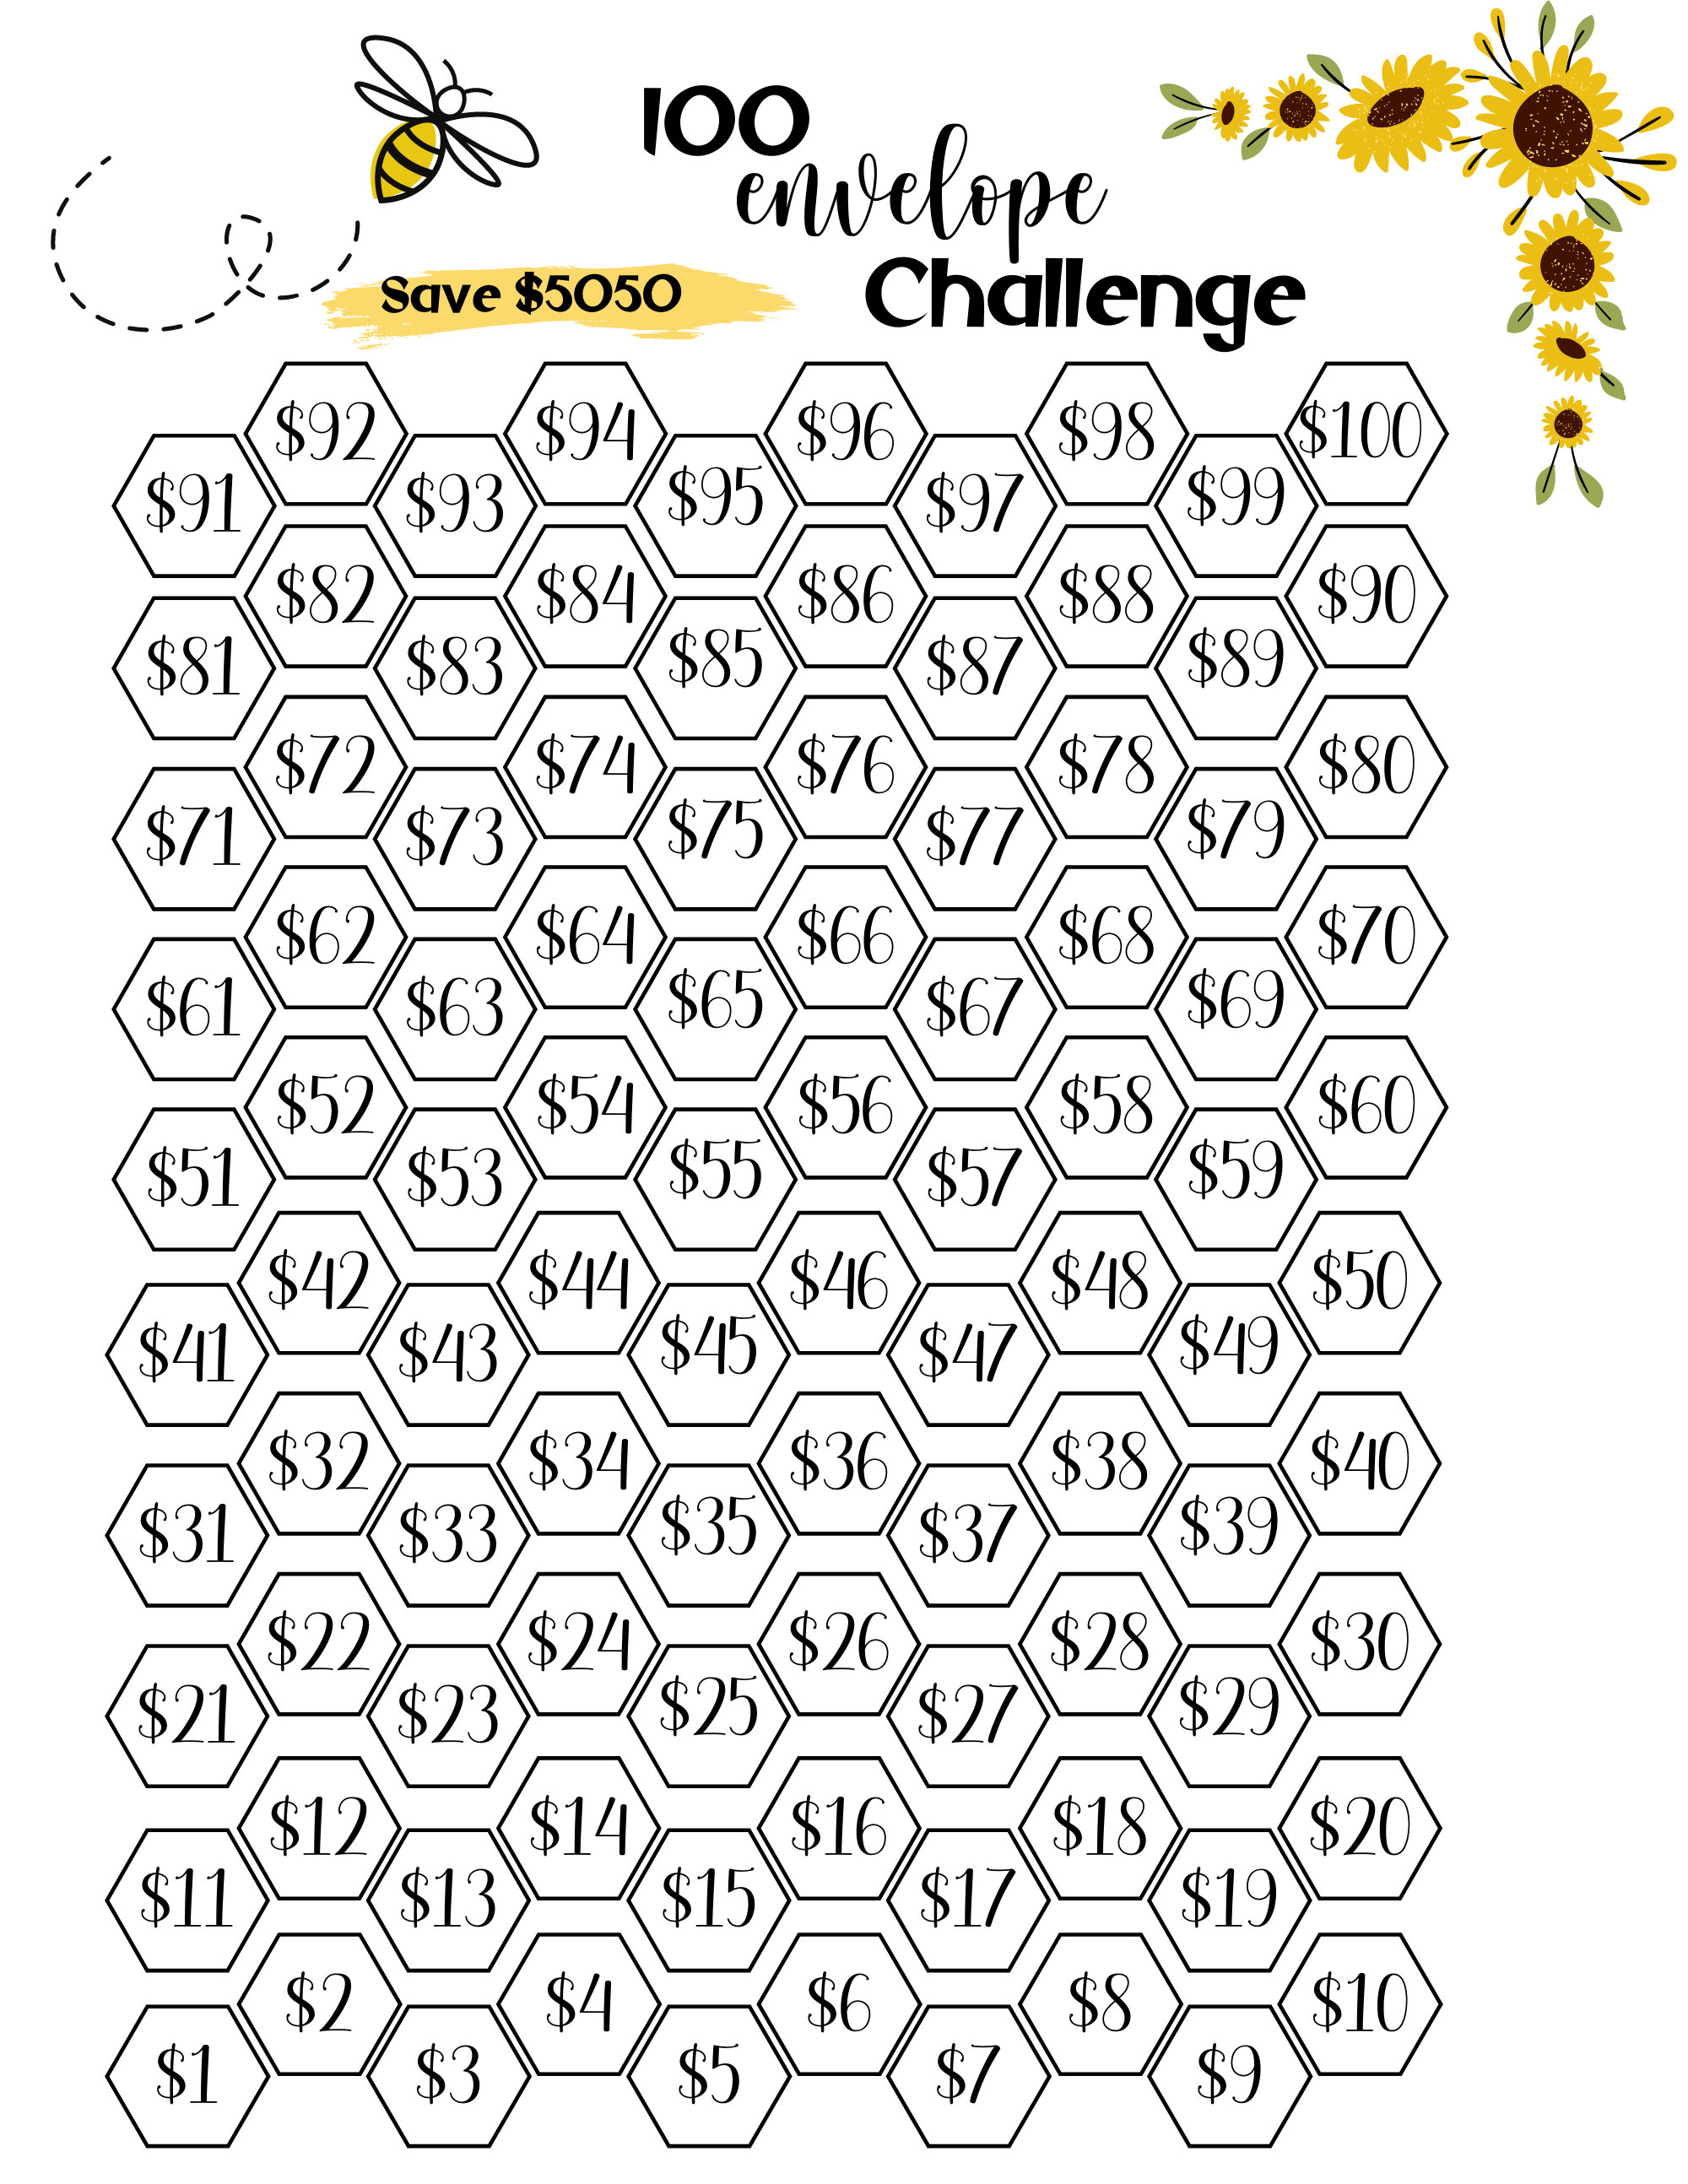 100 Envelope Challenge Tracker Printable Savings Goal Money Etsy Canada 